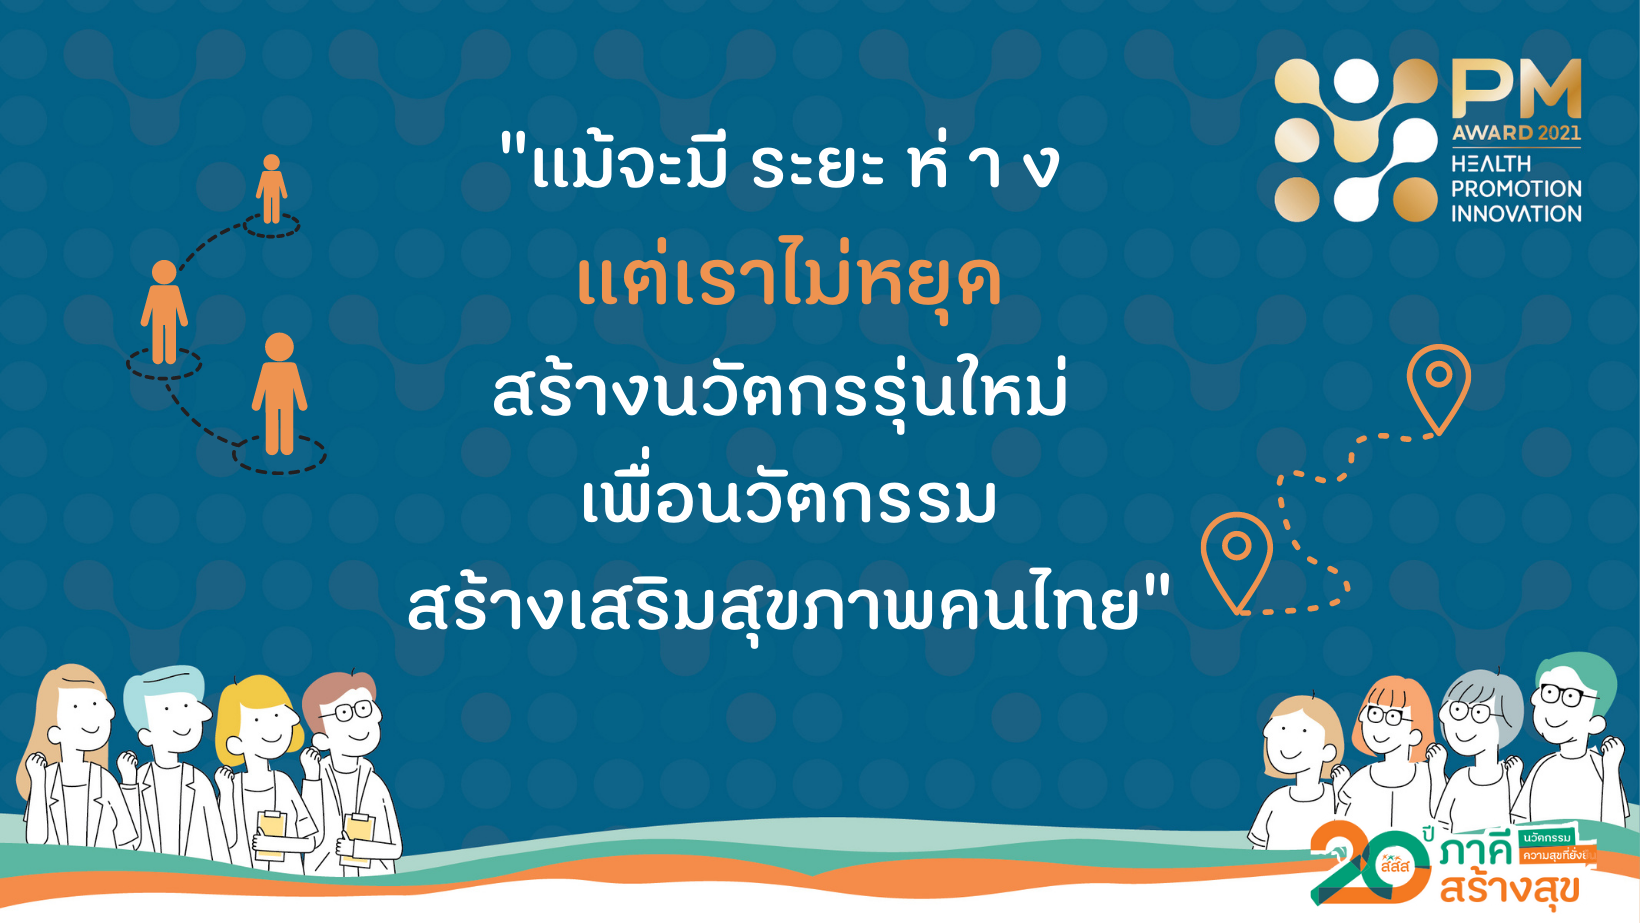 Prime Minister’s Award 2021 ปั้นนวัตกรรุ่นใหม่ หัวใจสุขภาวะ thaihealth